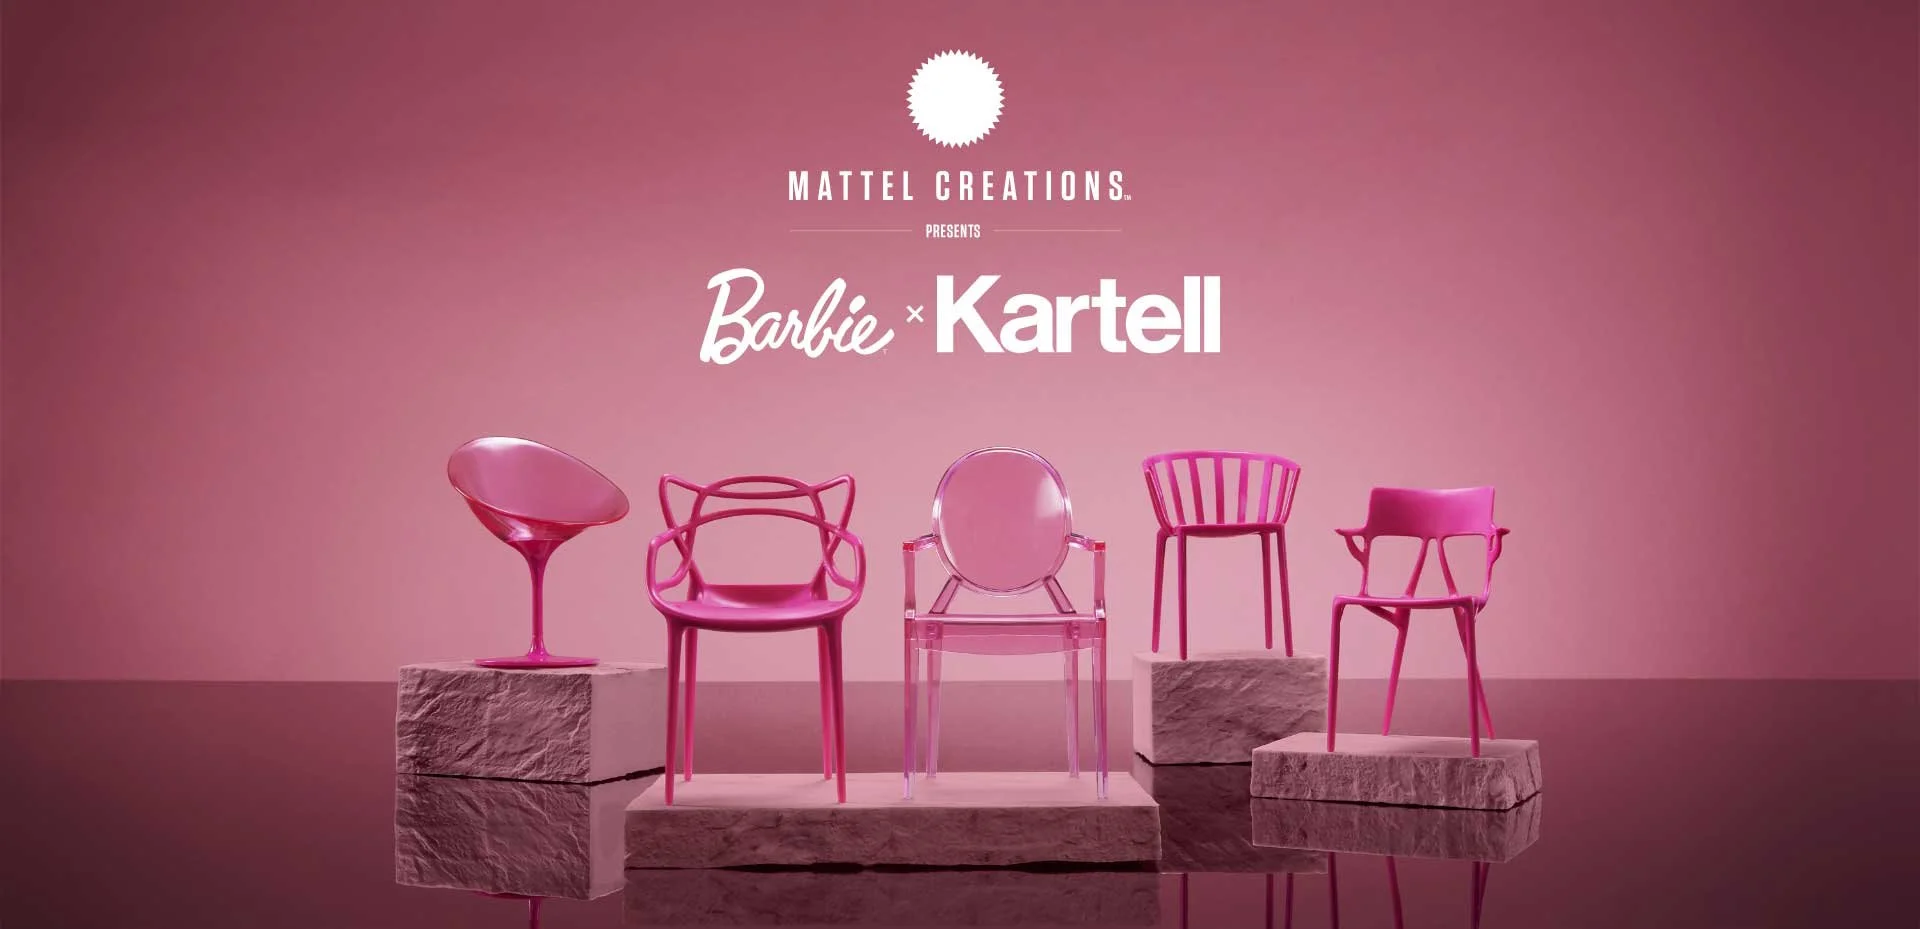 Mattel Creations presenta Barbie x Kartell